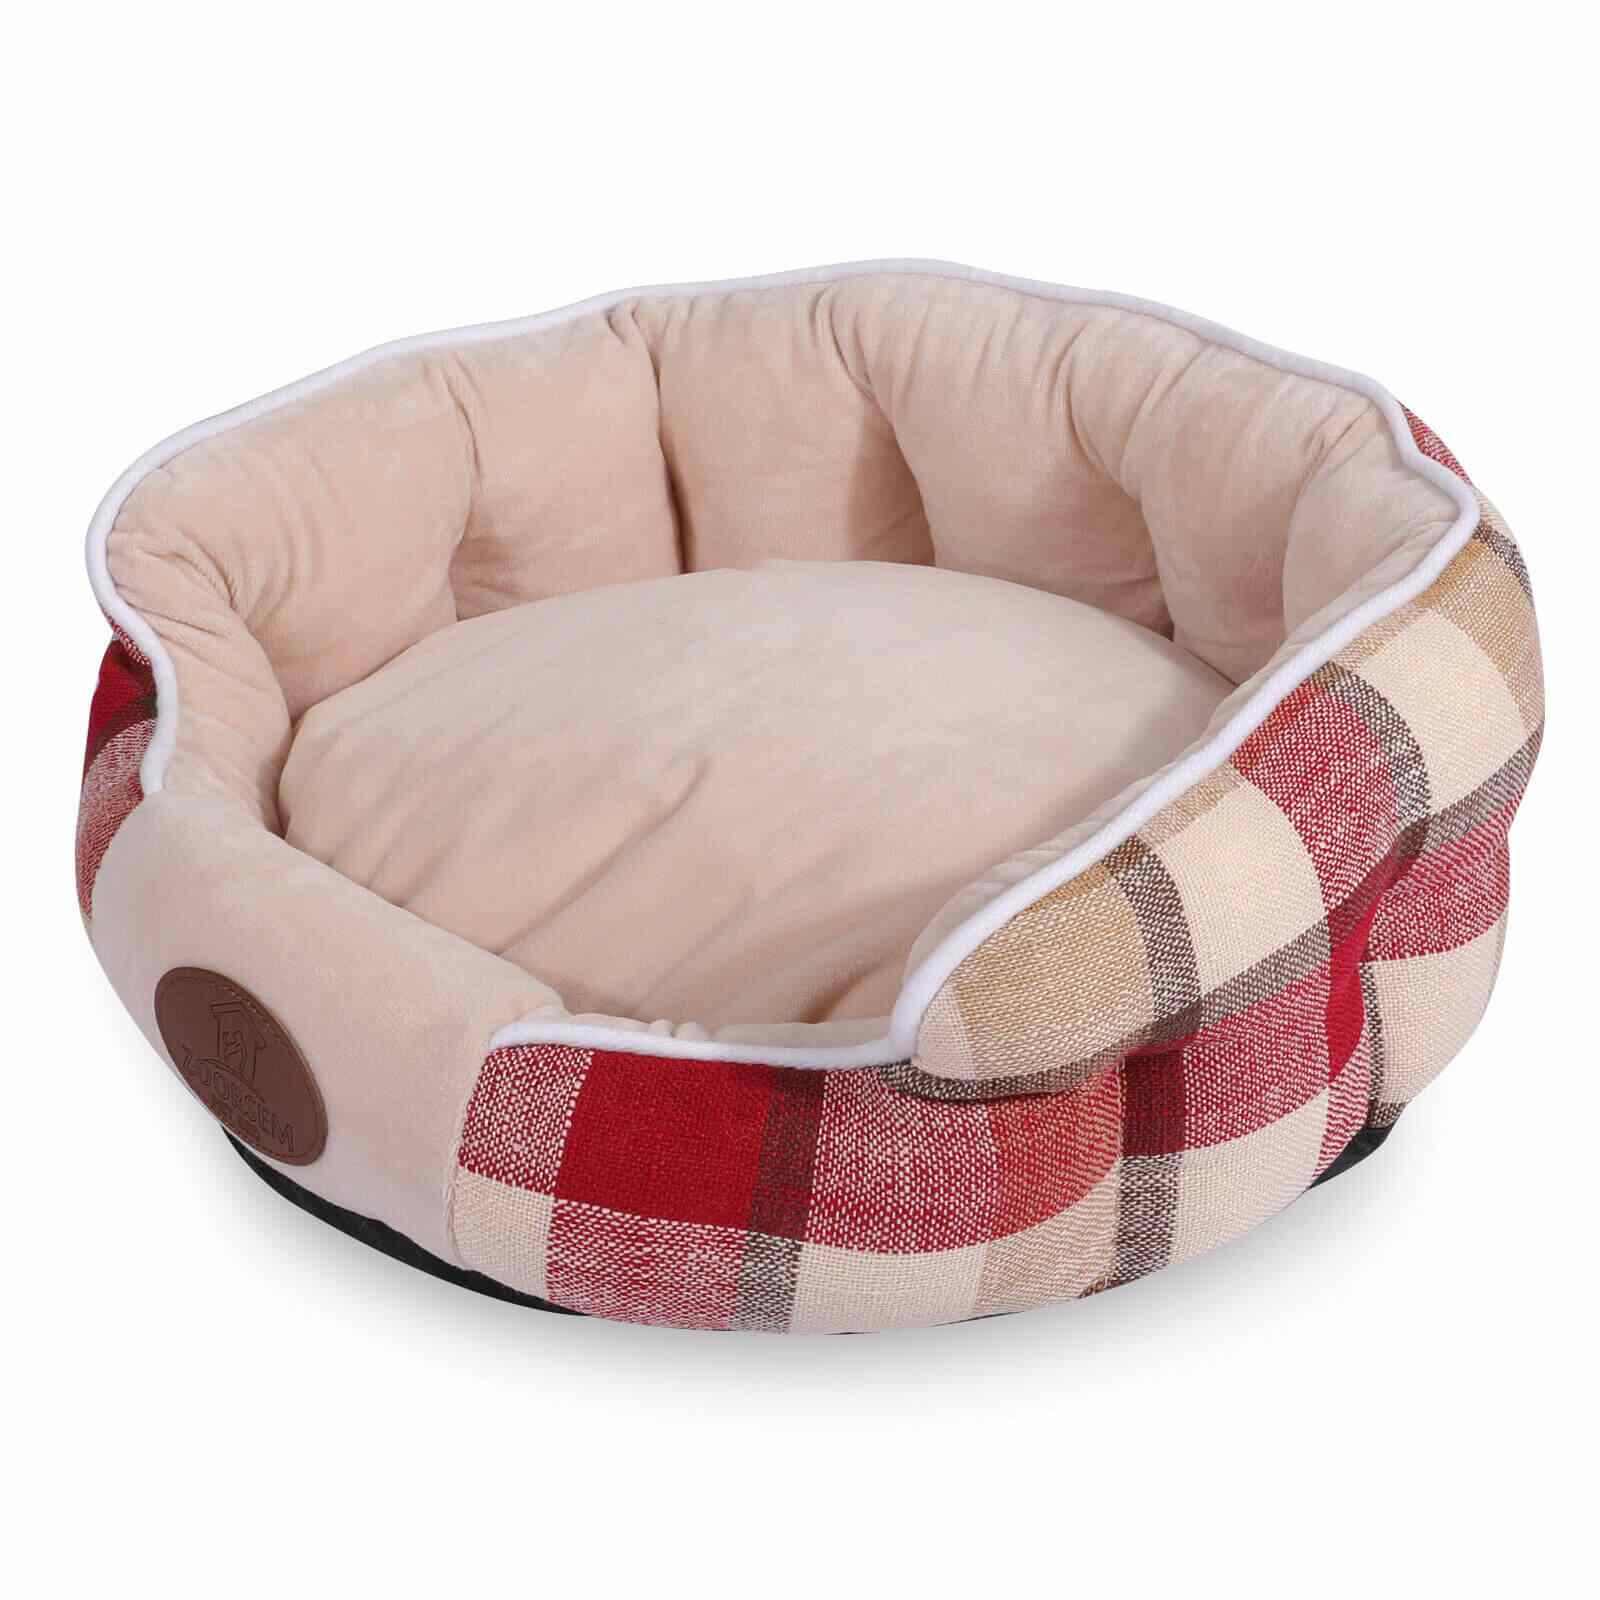 Showing of Washable Soft Plush Pet Dog Cat Bed